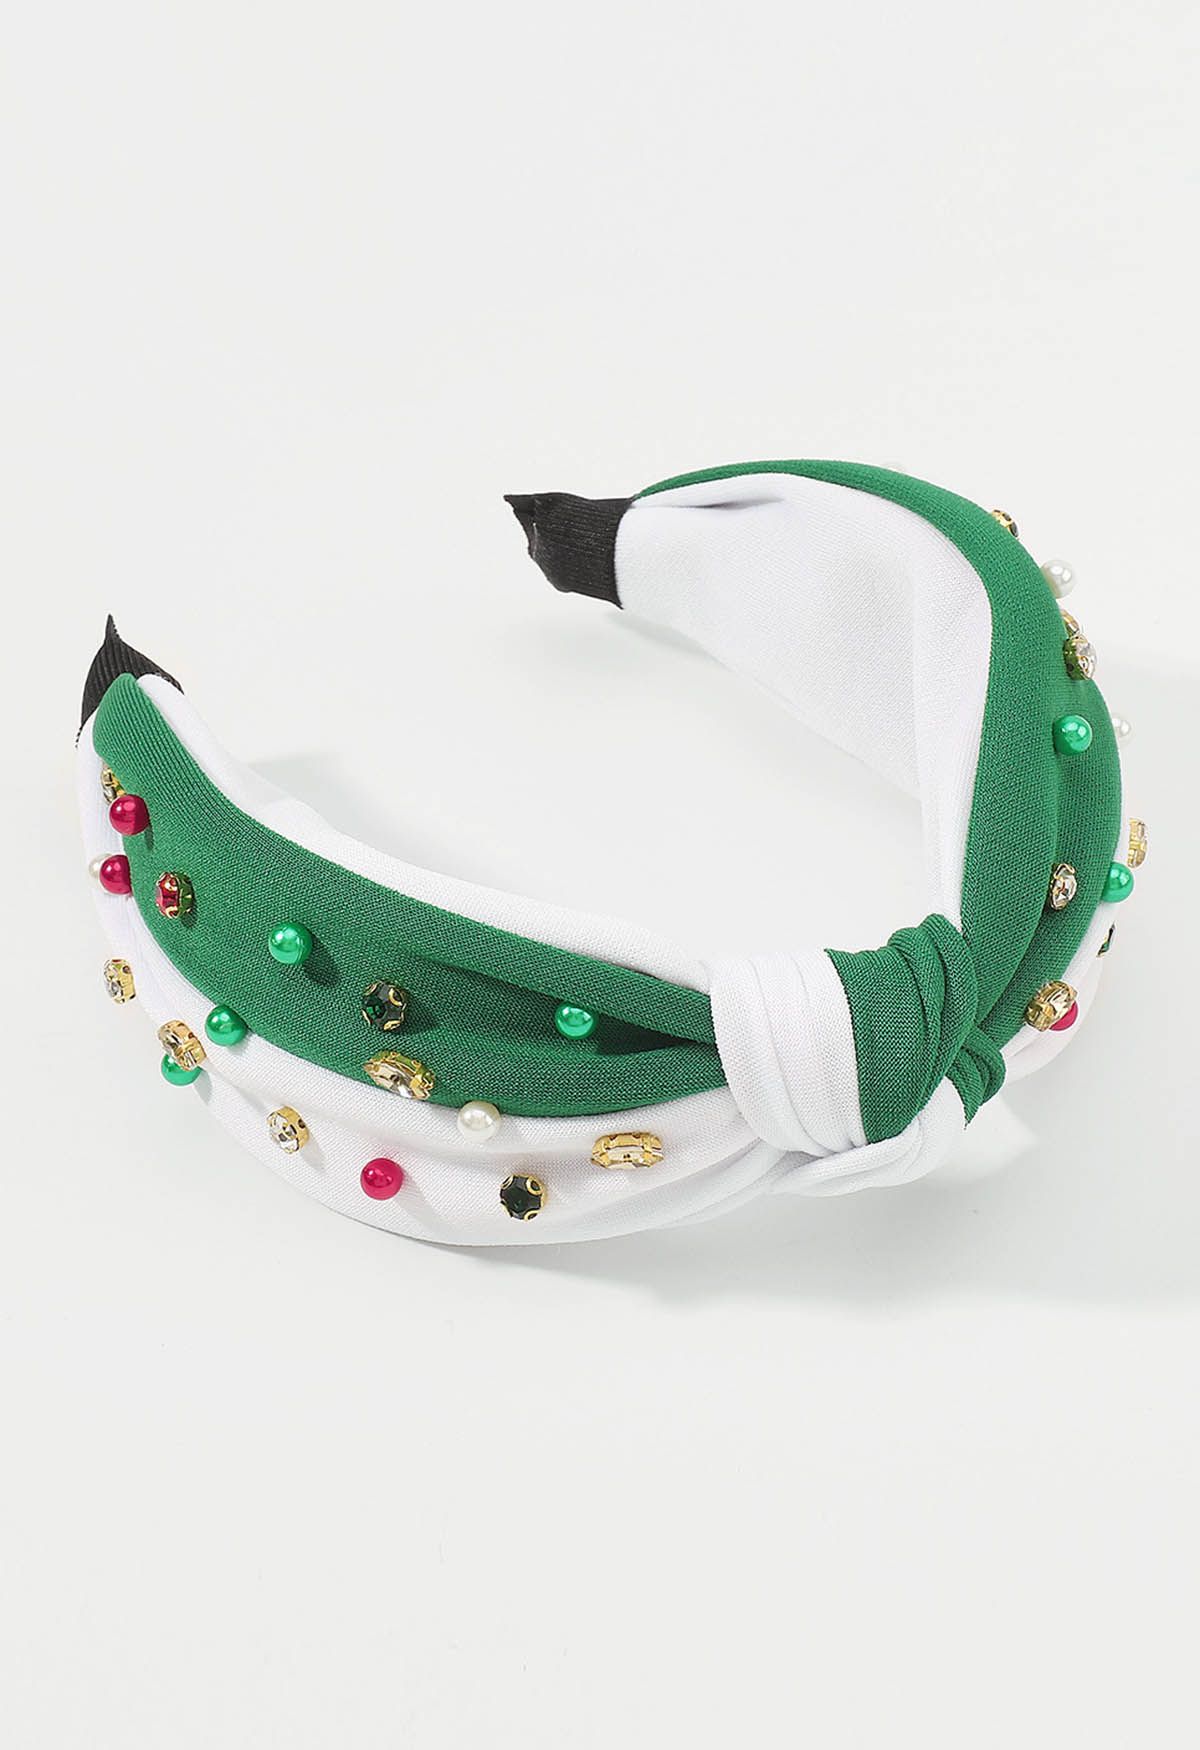 Knotted Rhinestone Beaded Headband in Green